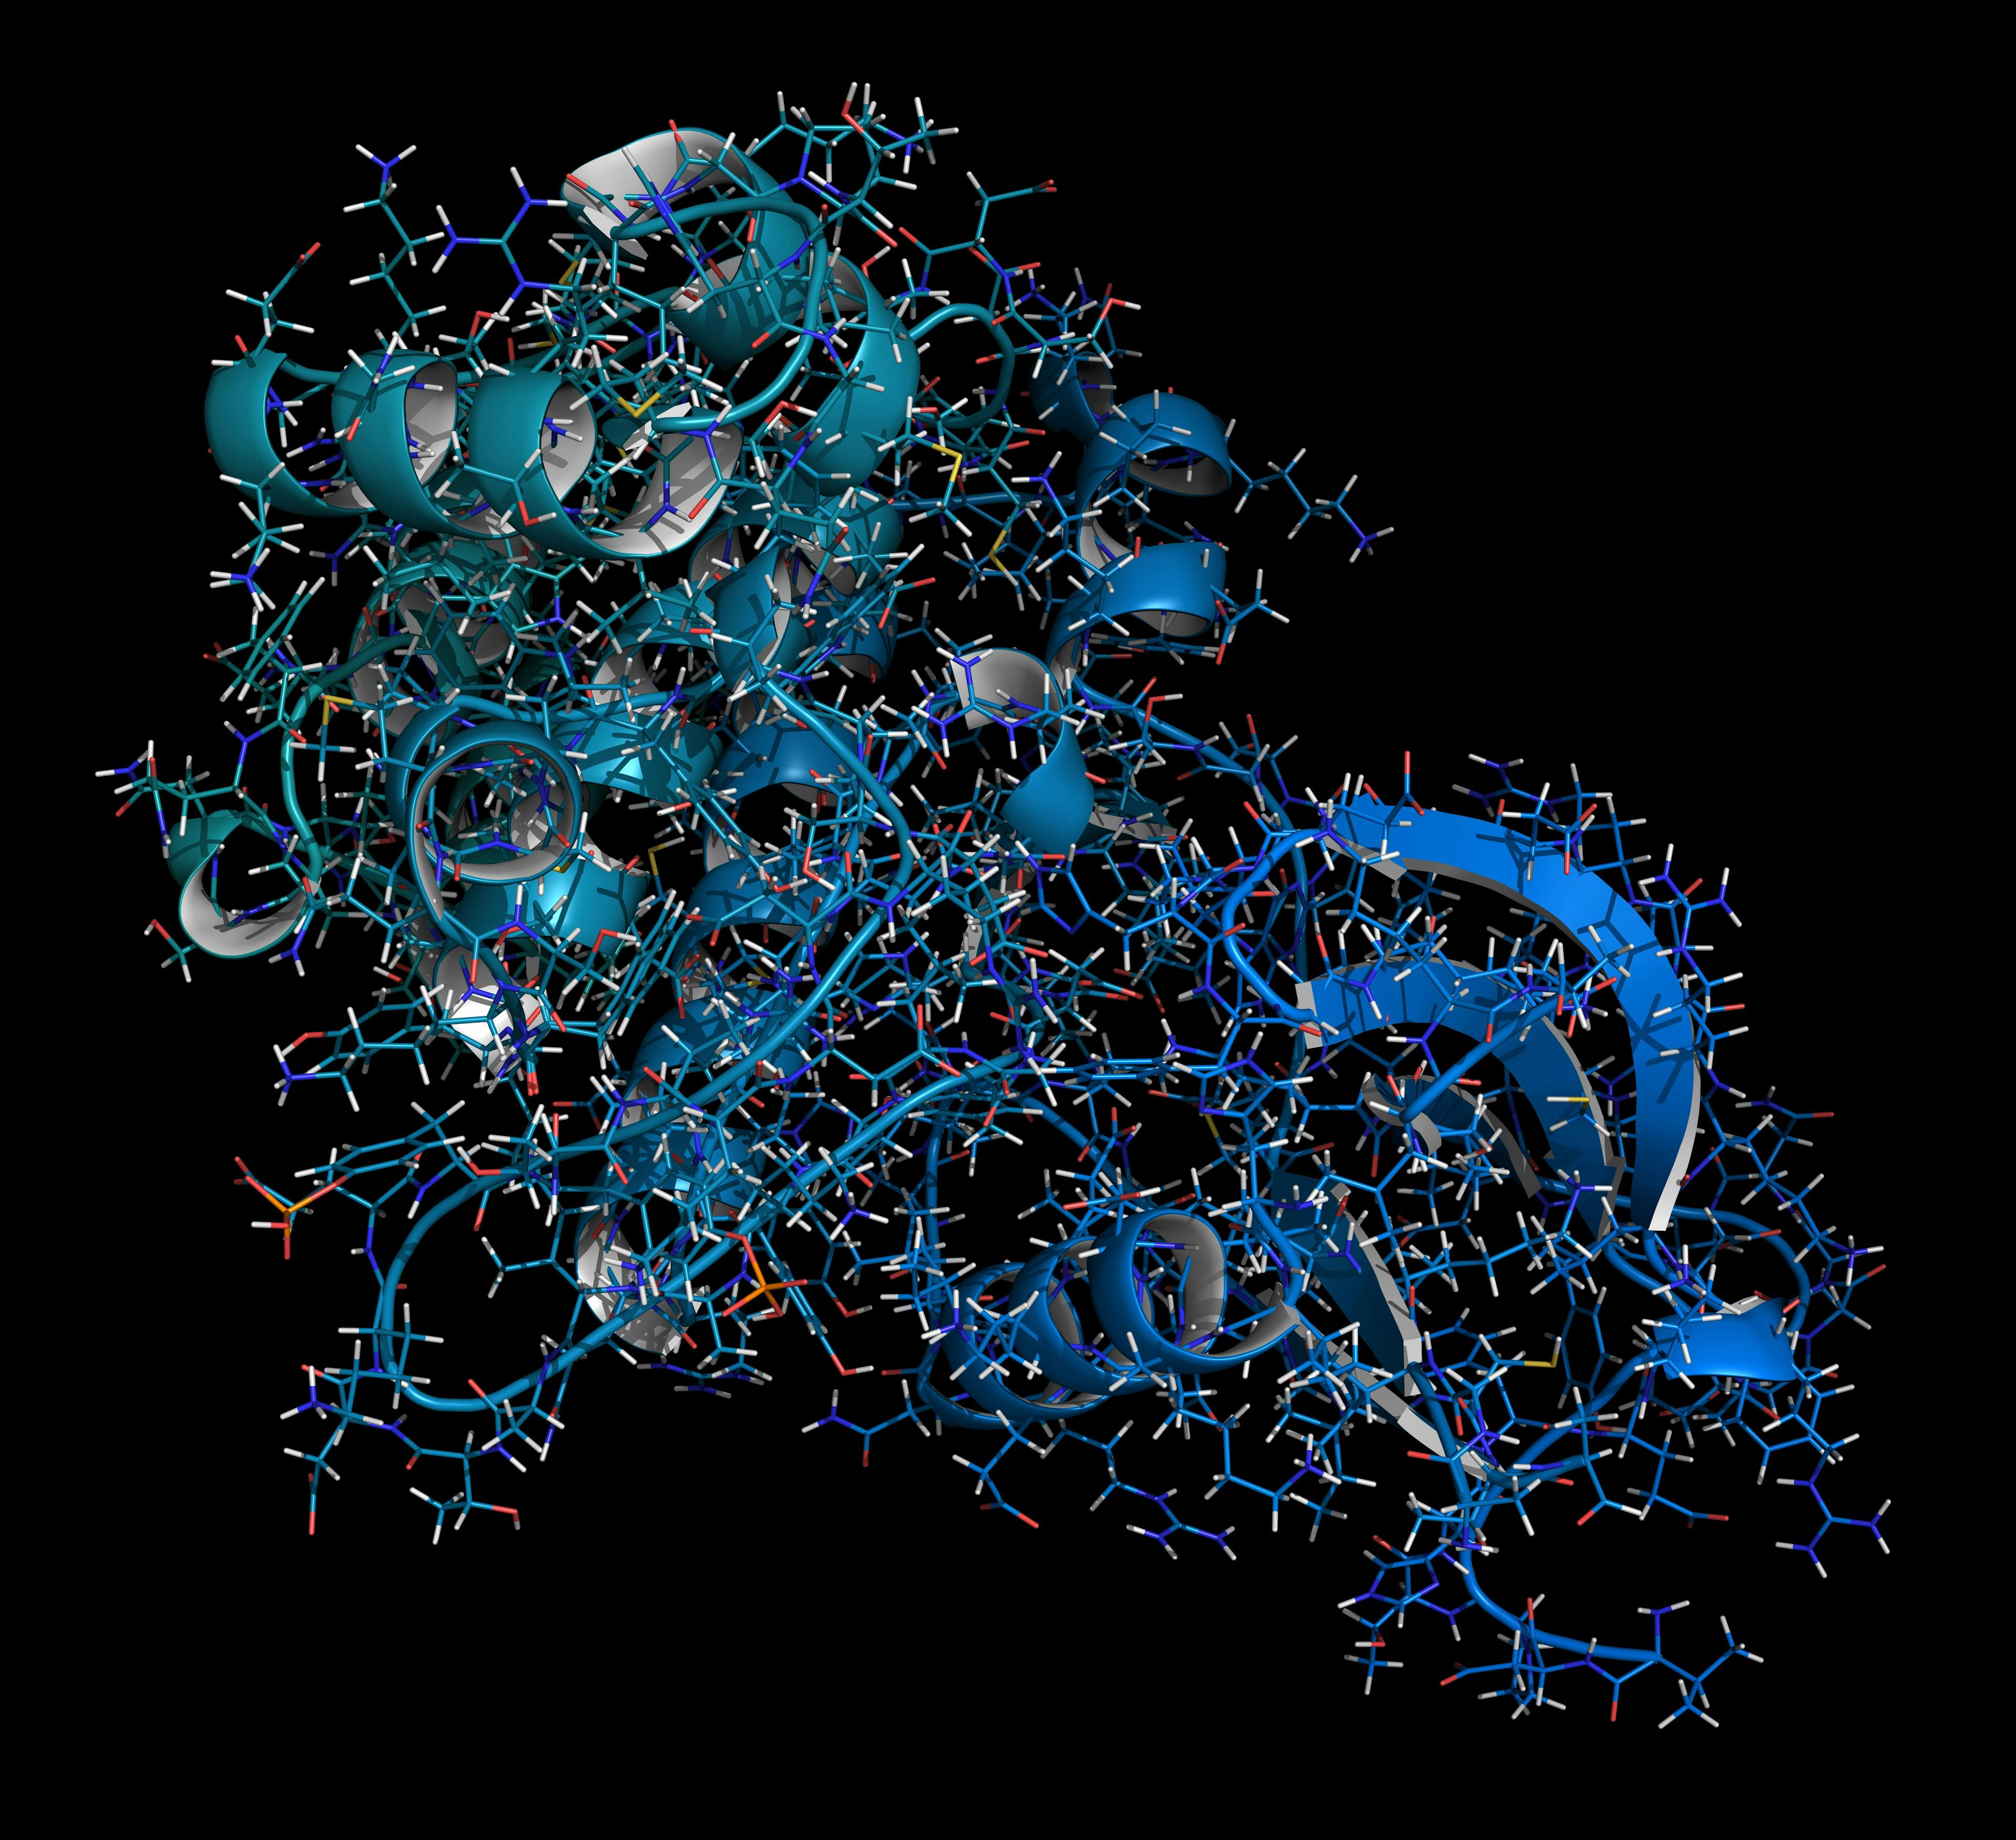 3D image of Janus kinase 1 protein | Image credit: © molekuul.be   stock.adobe.com